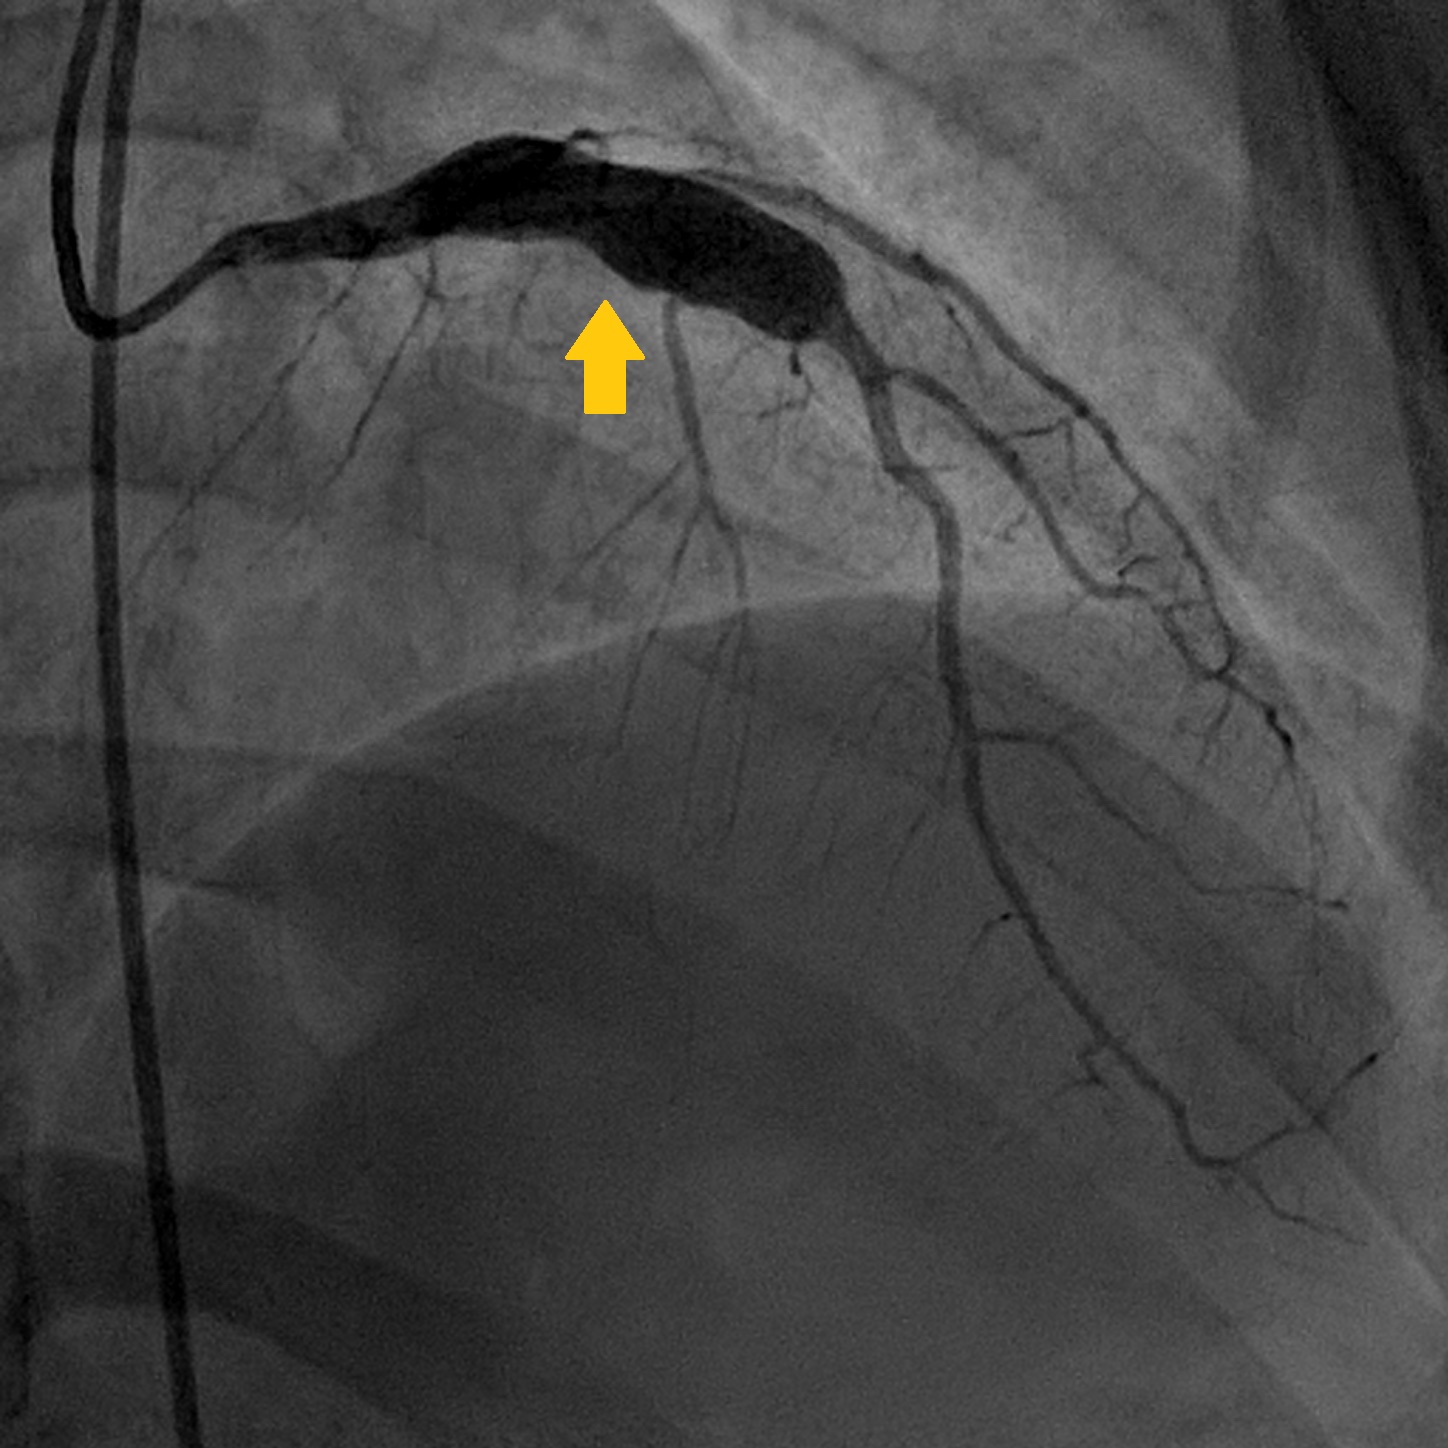 Aneurysm of the left anterior descending artery (arrow).[2]